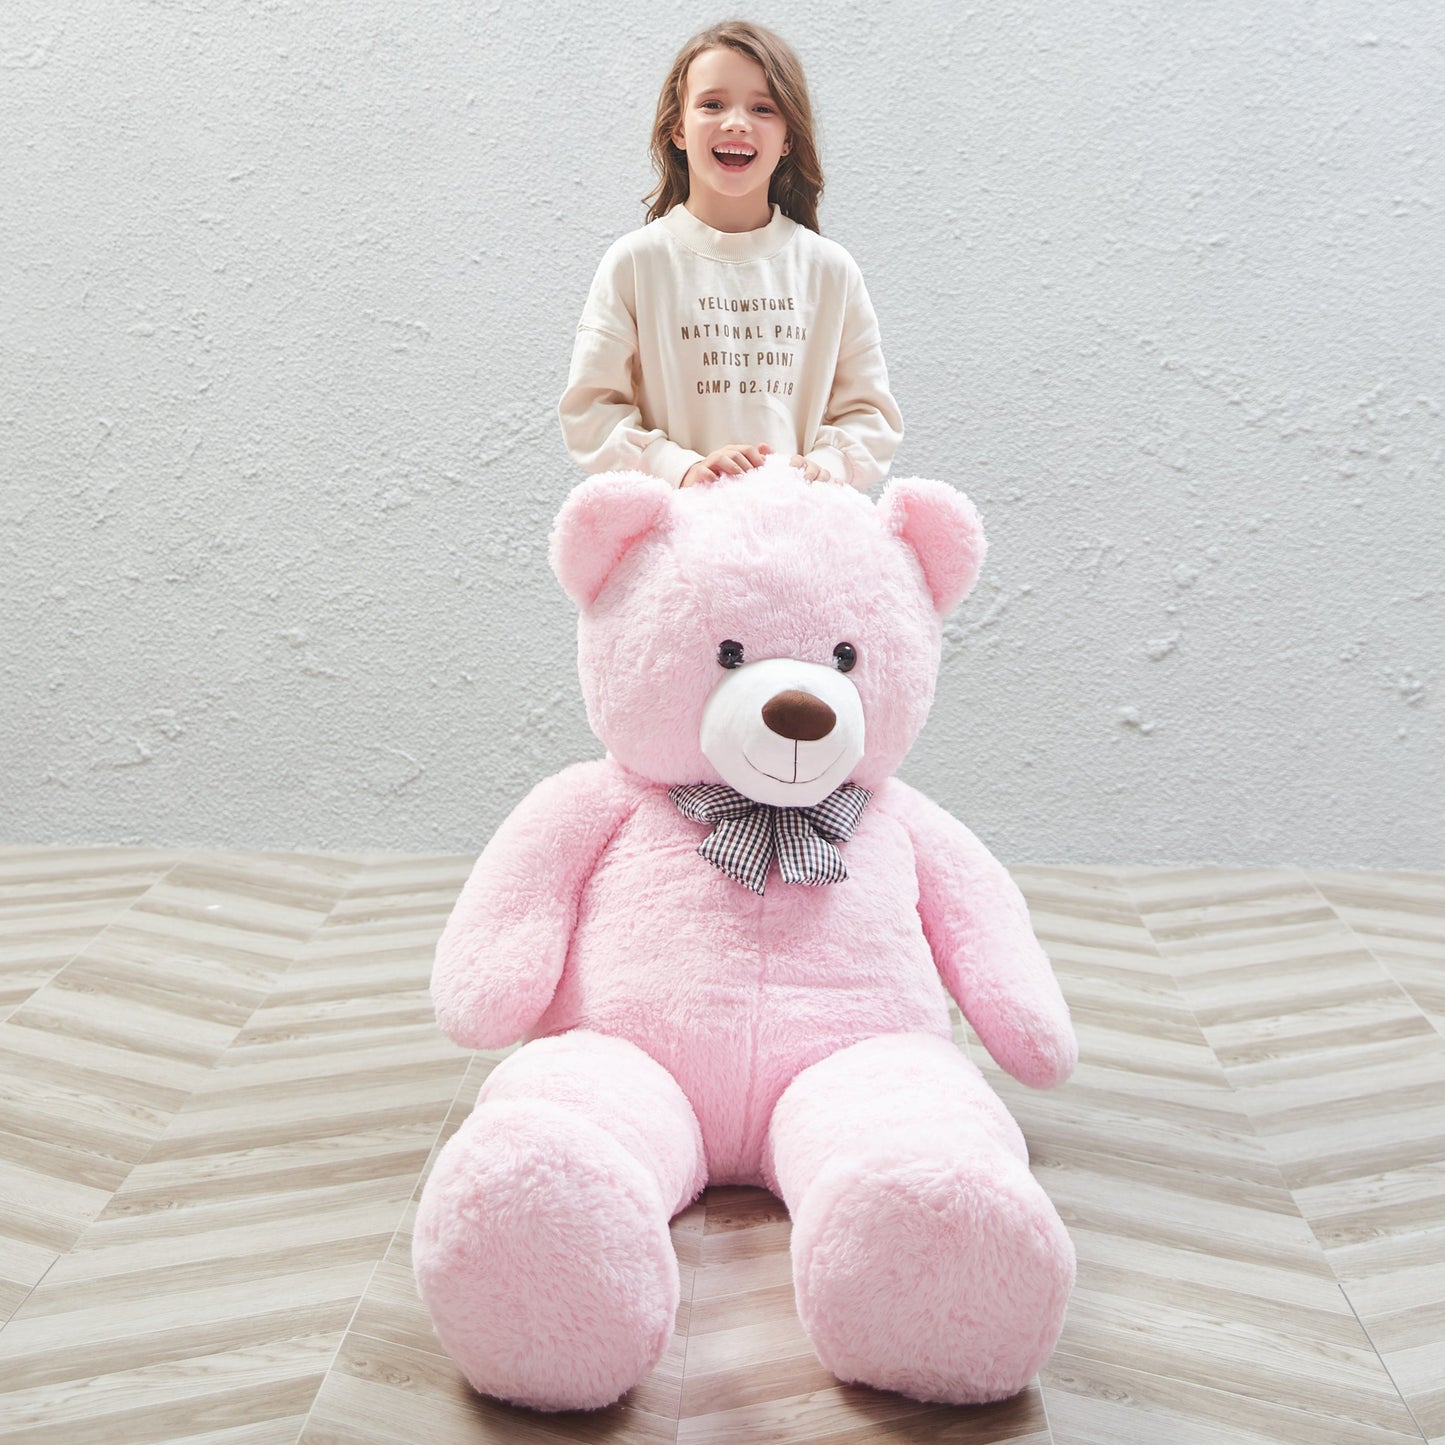 Giant Teddy Bear Stuffed Animal Toy, Pink, 39/47/55 Inches - MorisMos Stuffed Animals